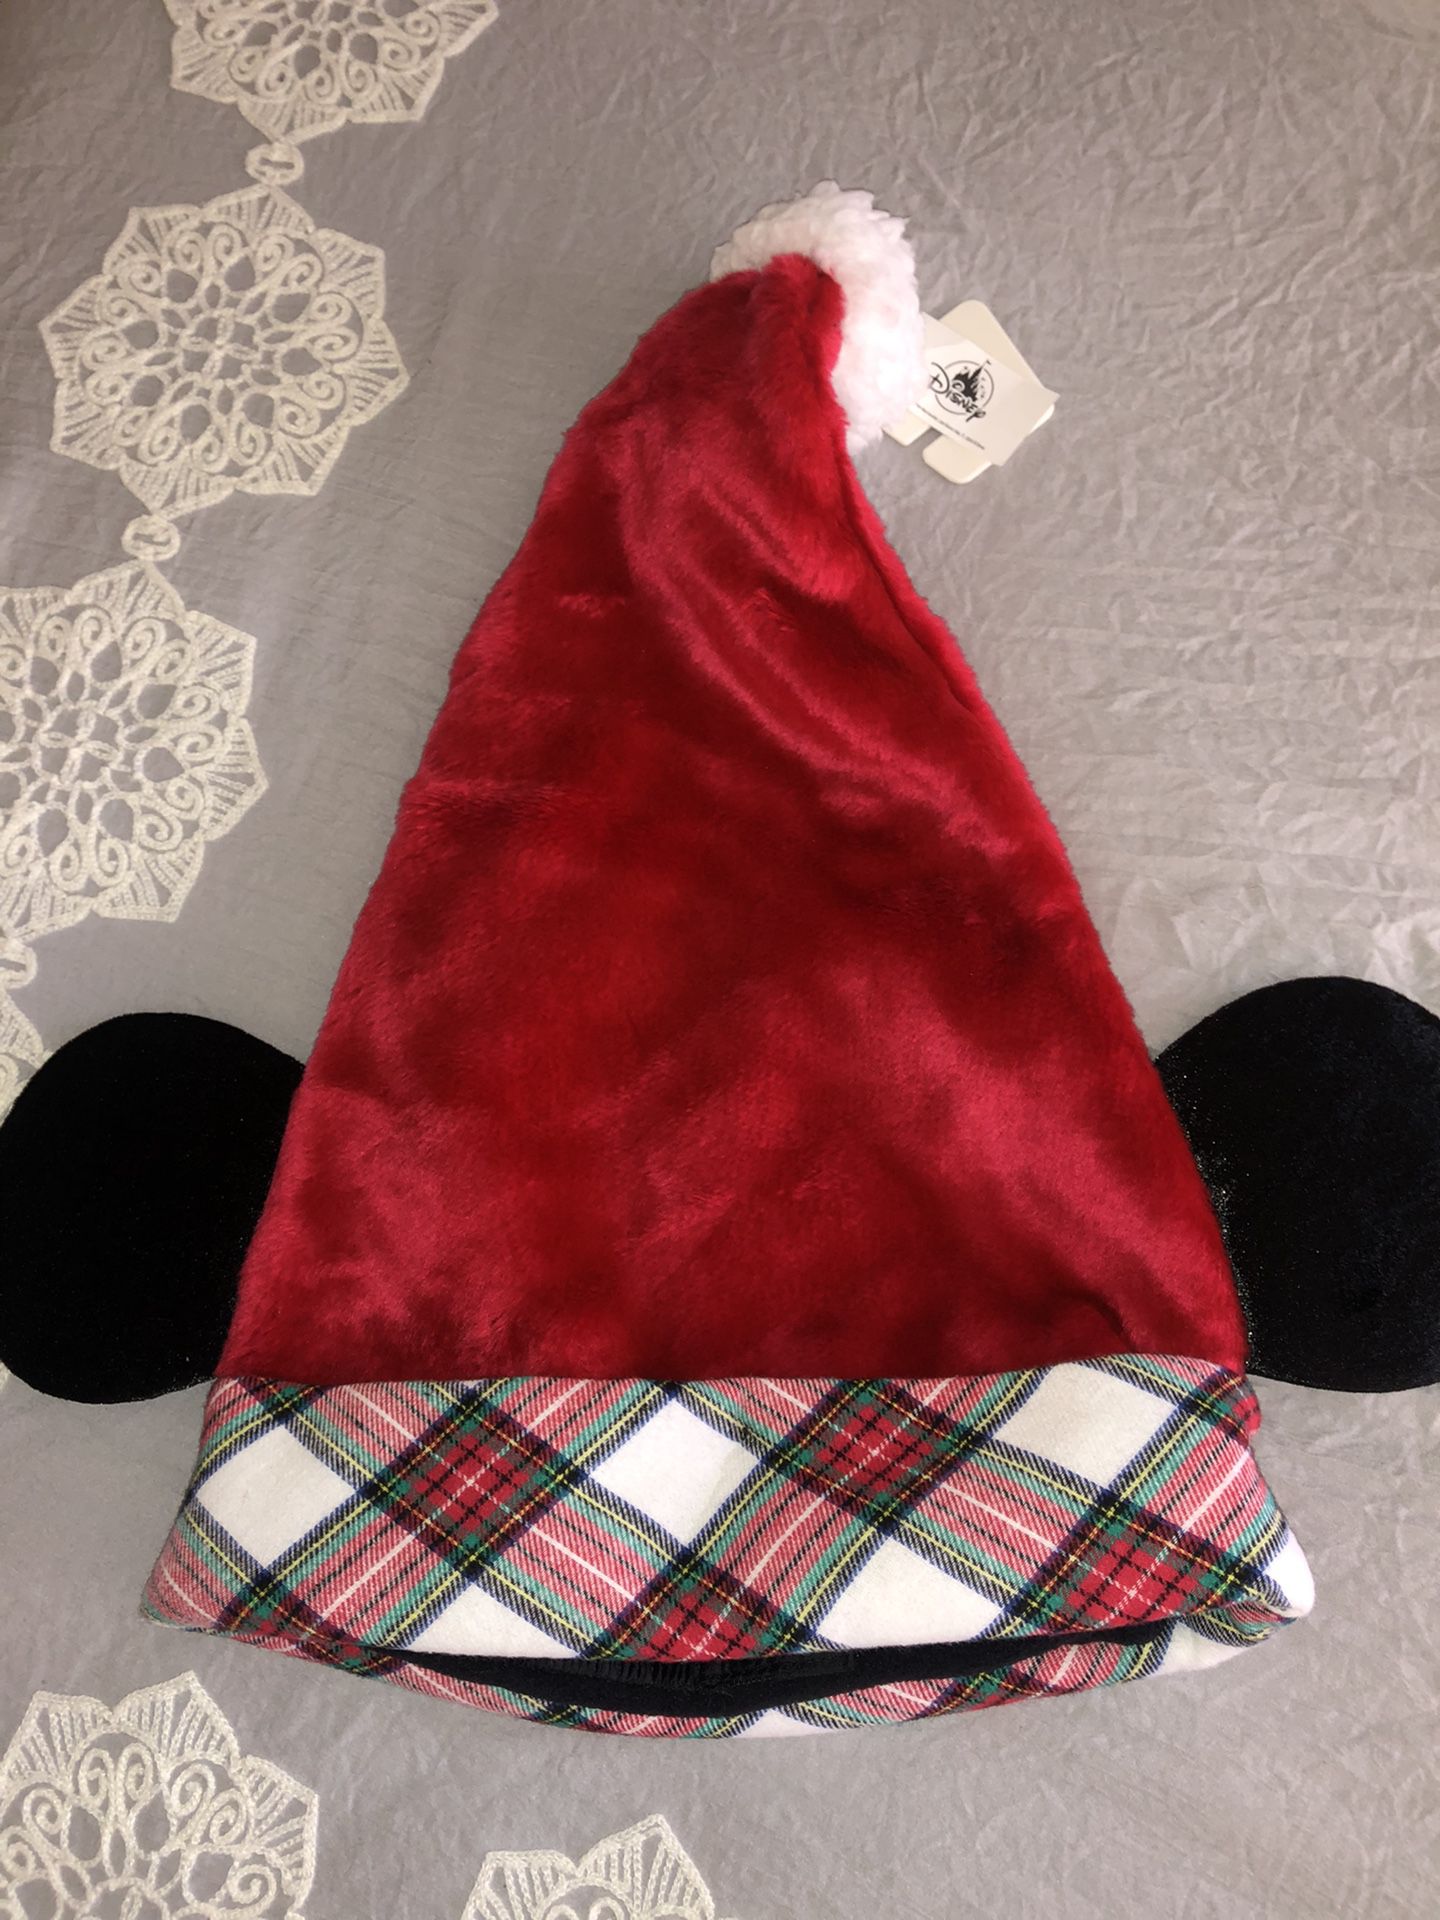 Disney Santa Hat W/ Mouse Ears - Mickey/Minnie Mouse Holiday Plaid Christmas